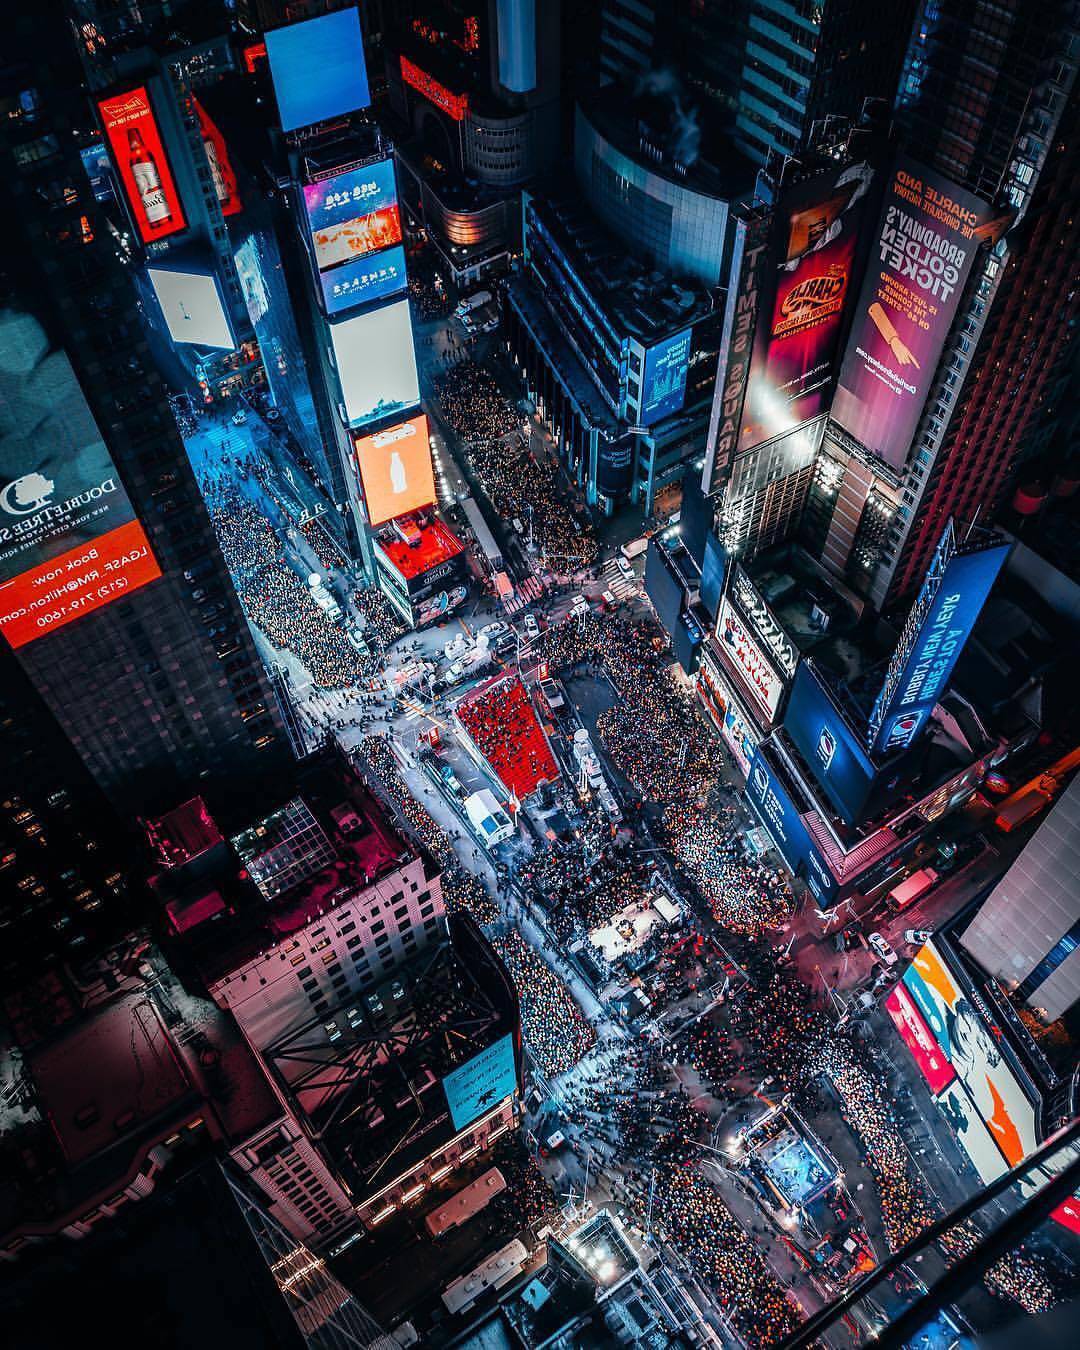 Silvester in New York - Times Square, Events, Parties und Feuerwerk